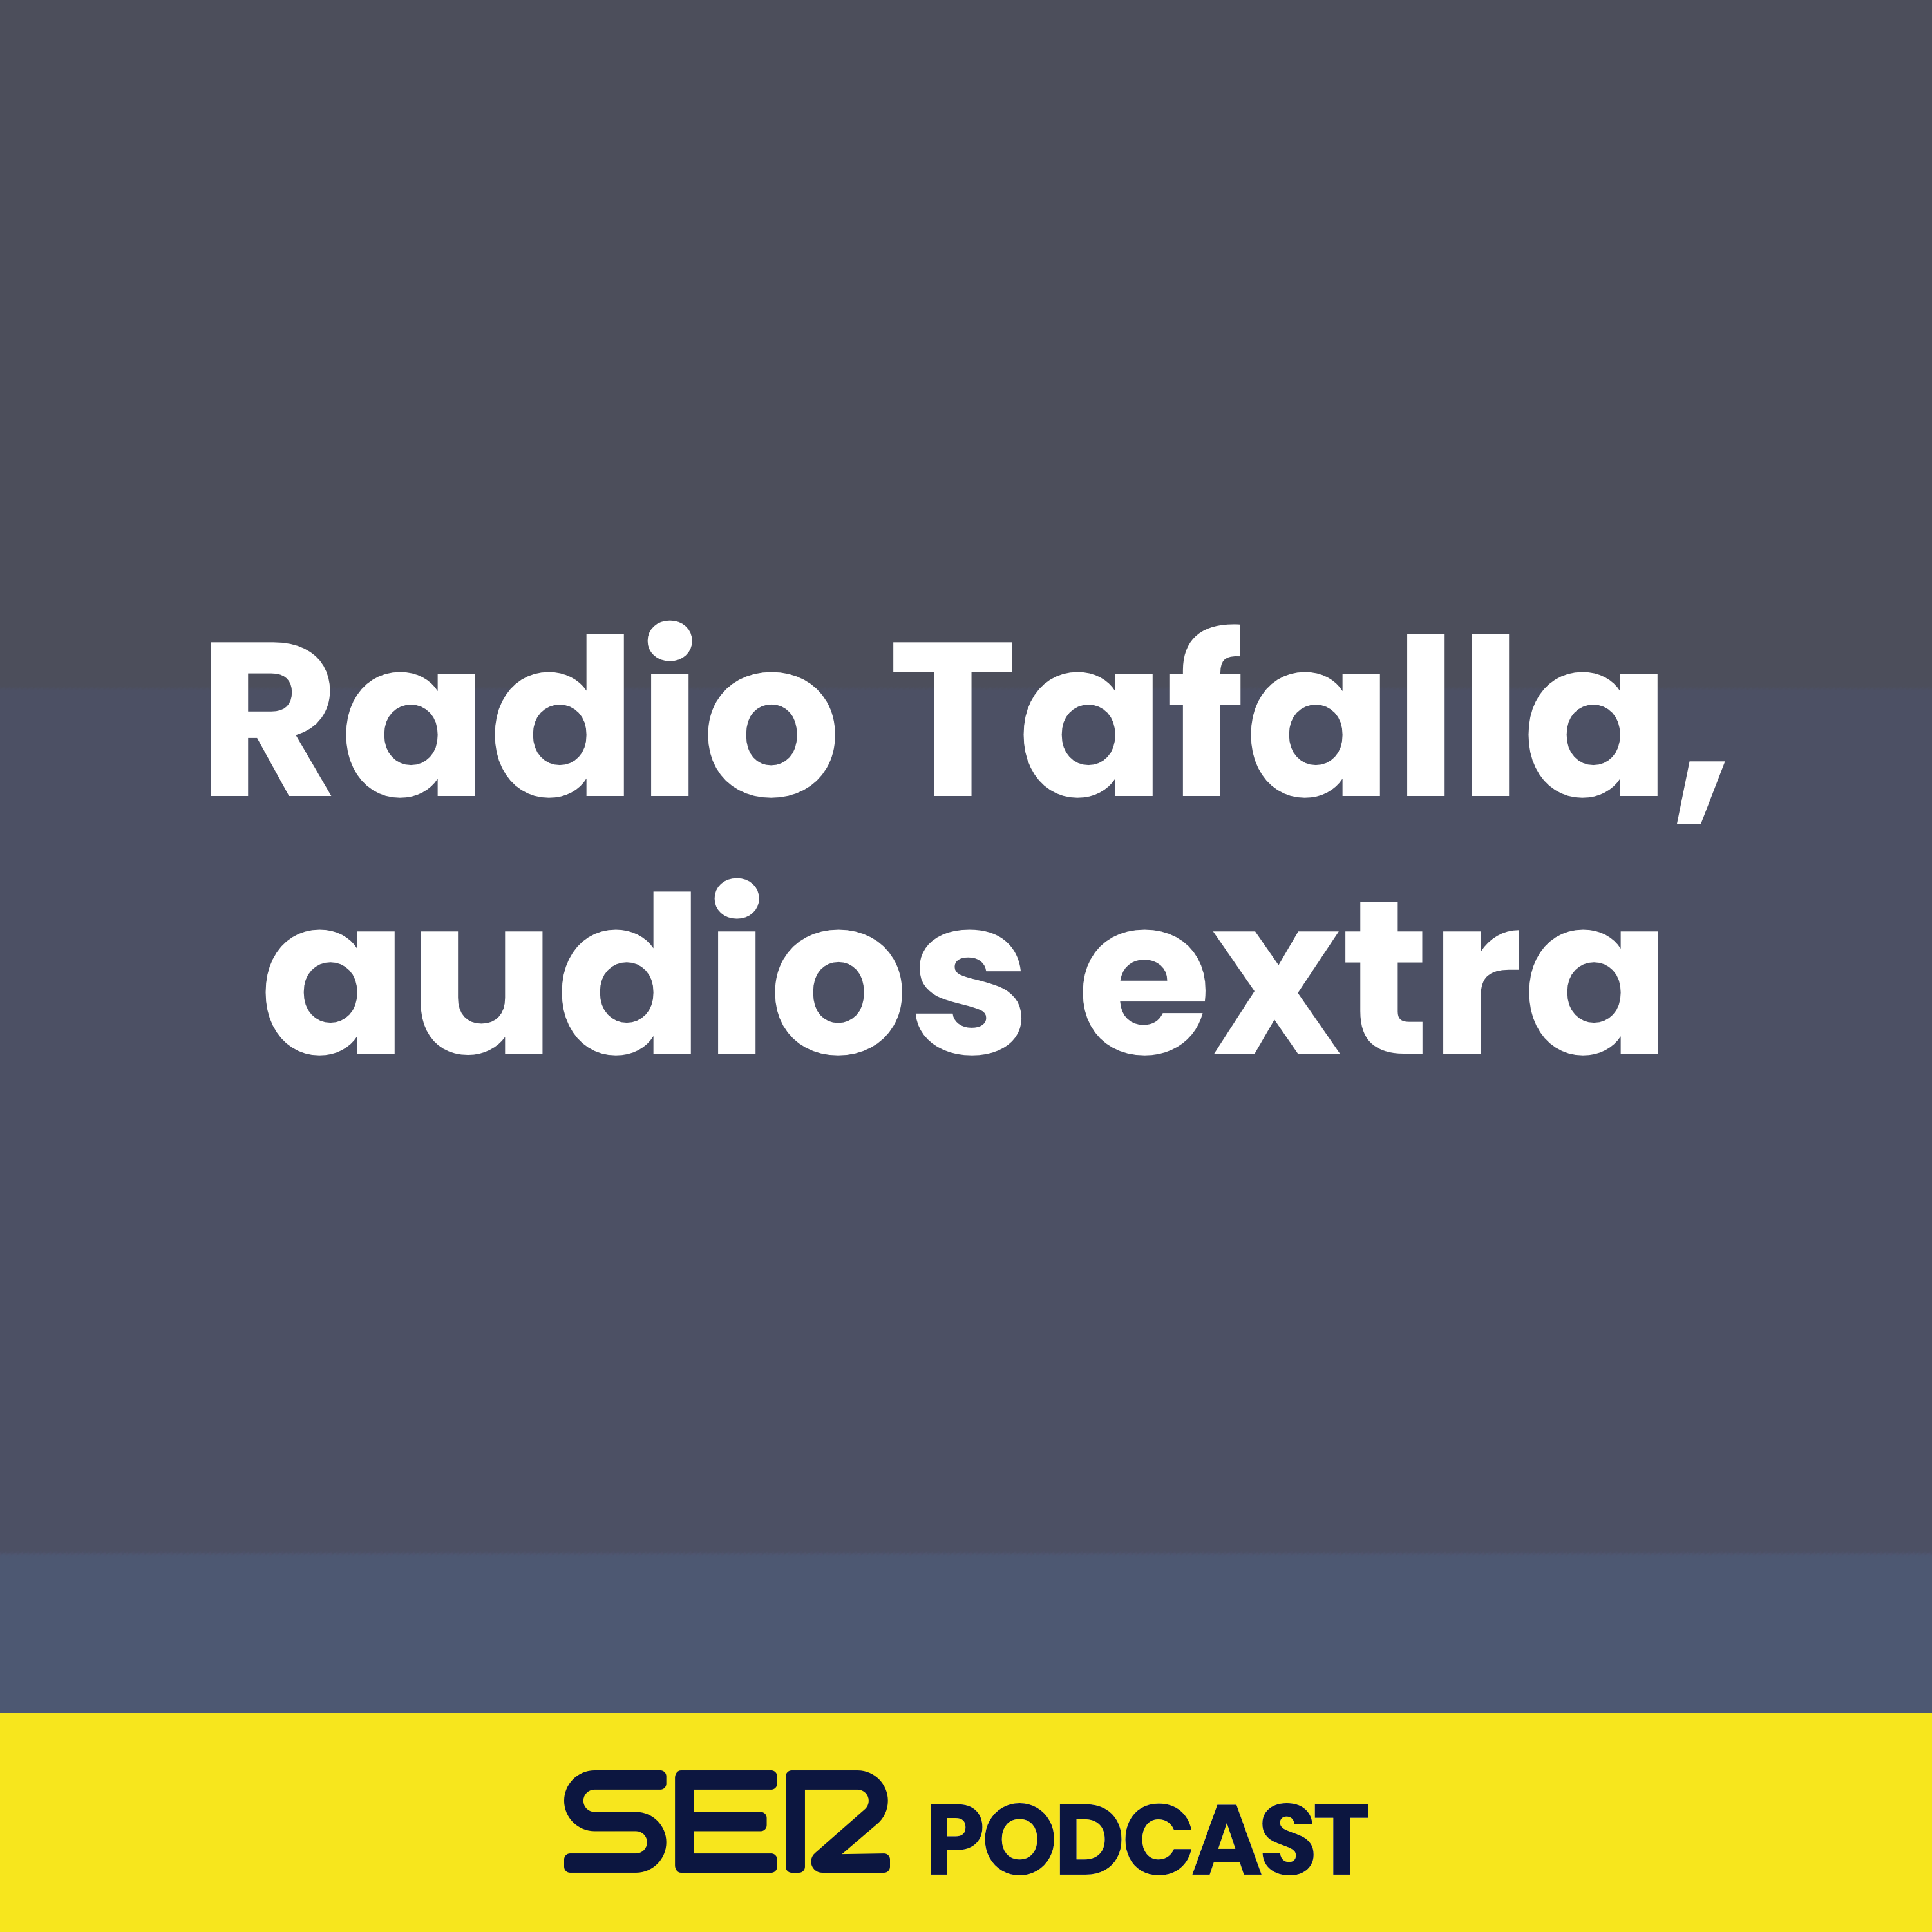 Radio Tafalla, audios extra